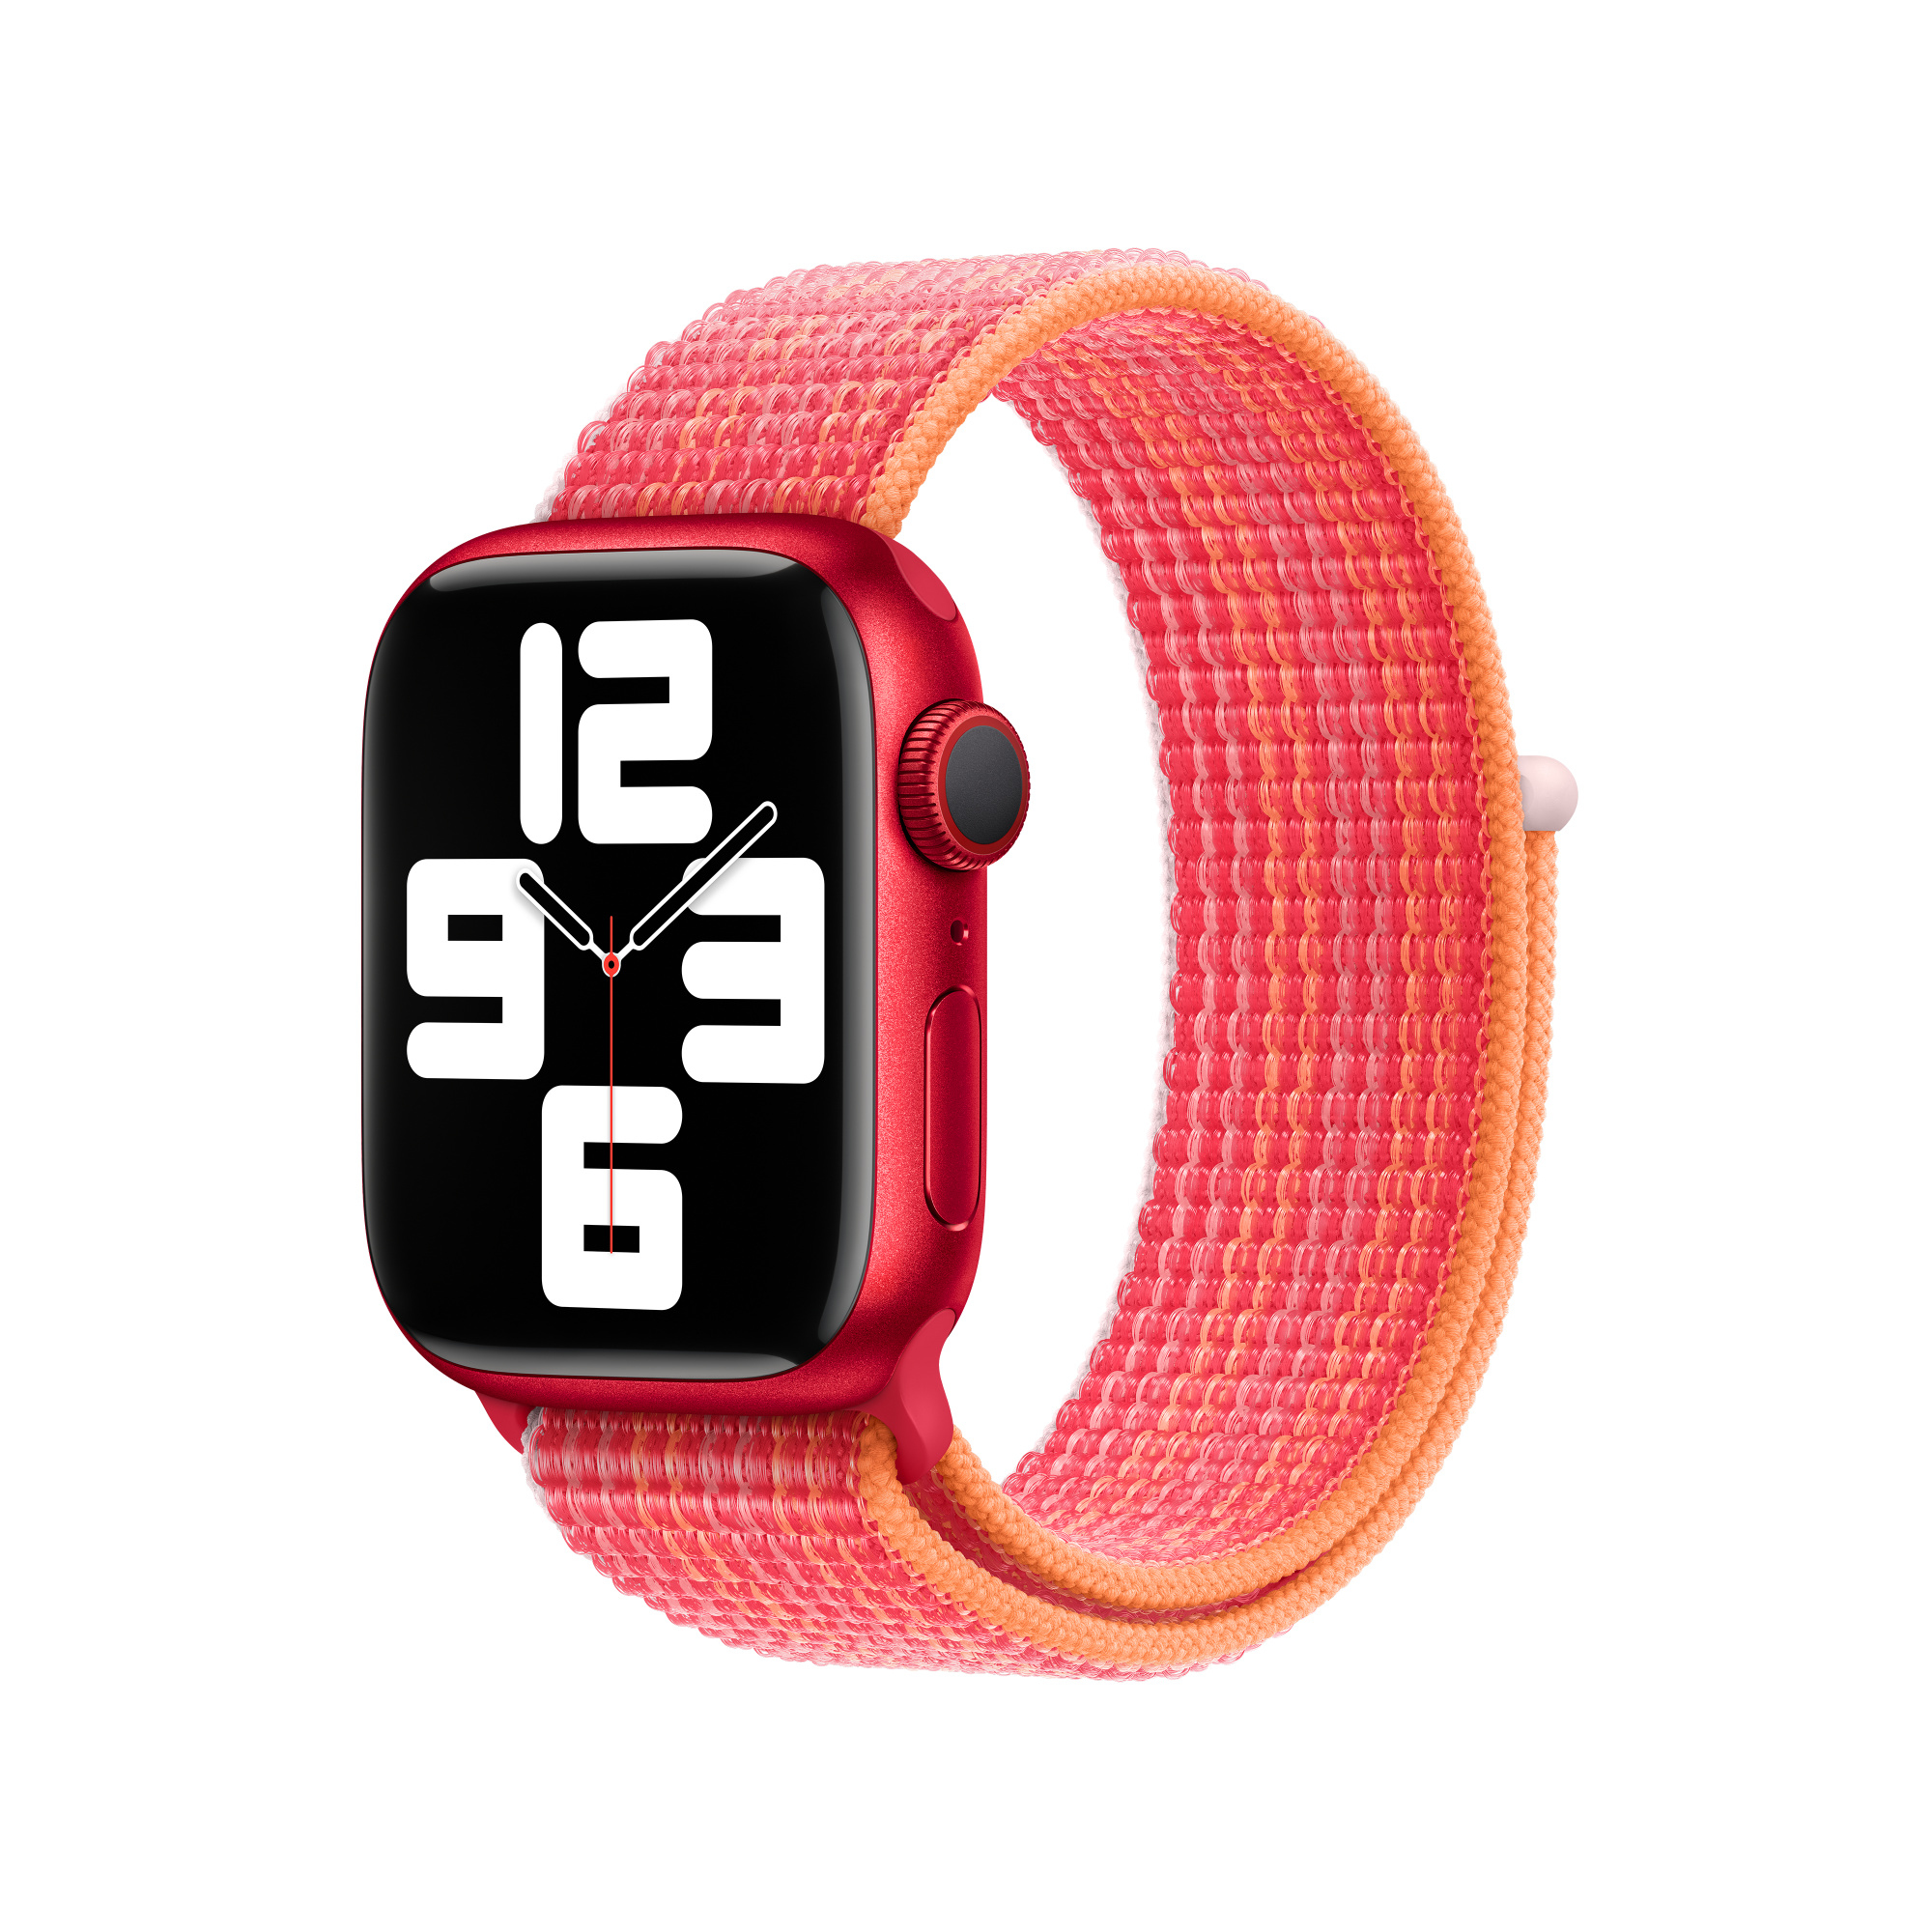 Apple (PRODUCT) RED - Uhrarmband für Smartwatch